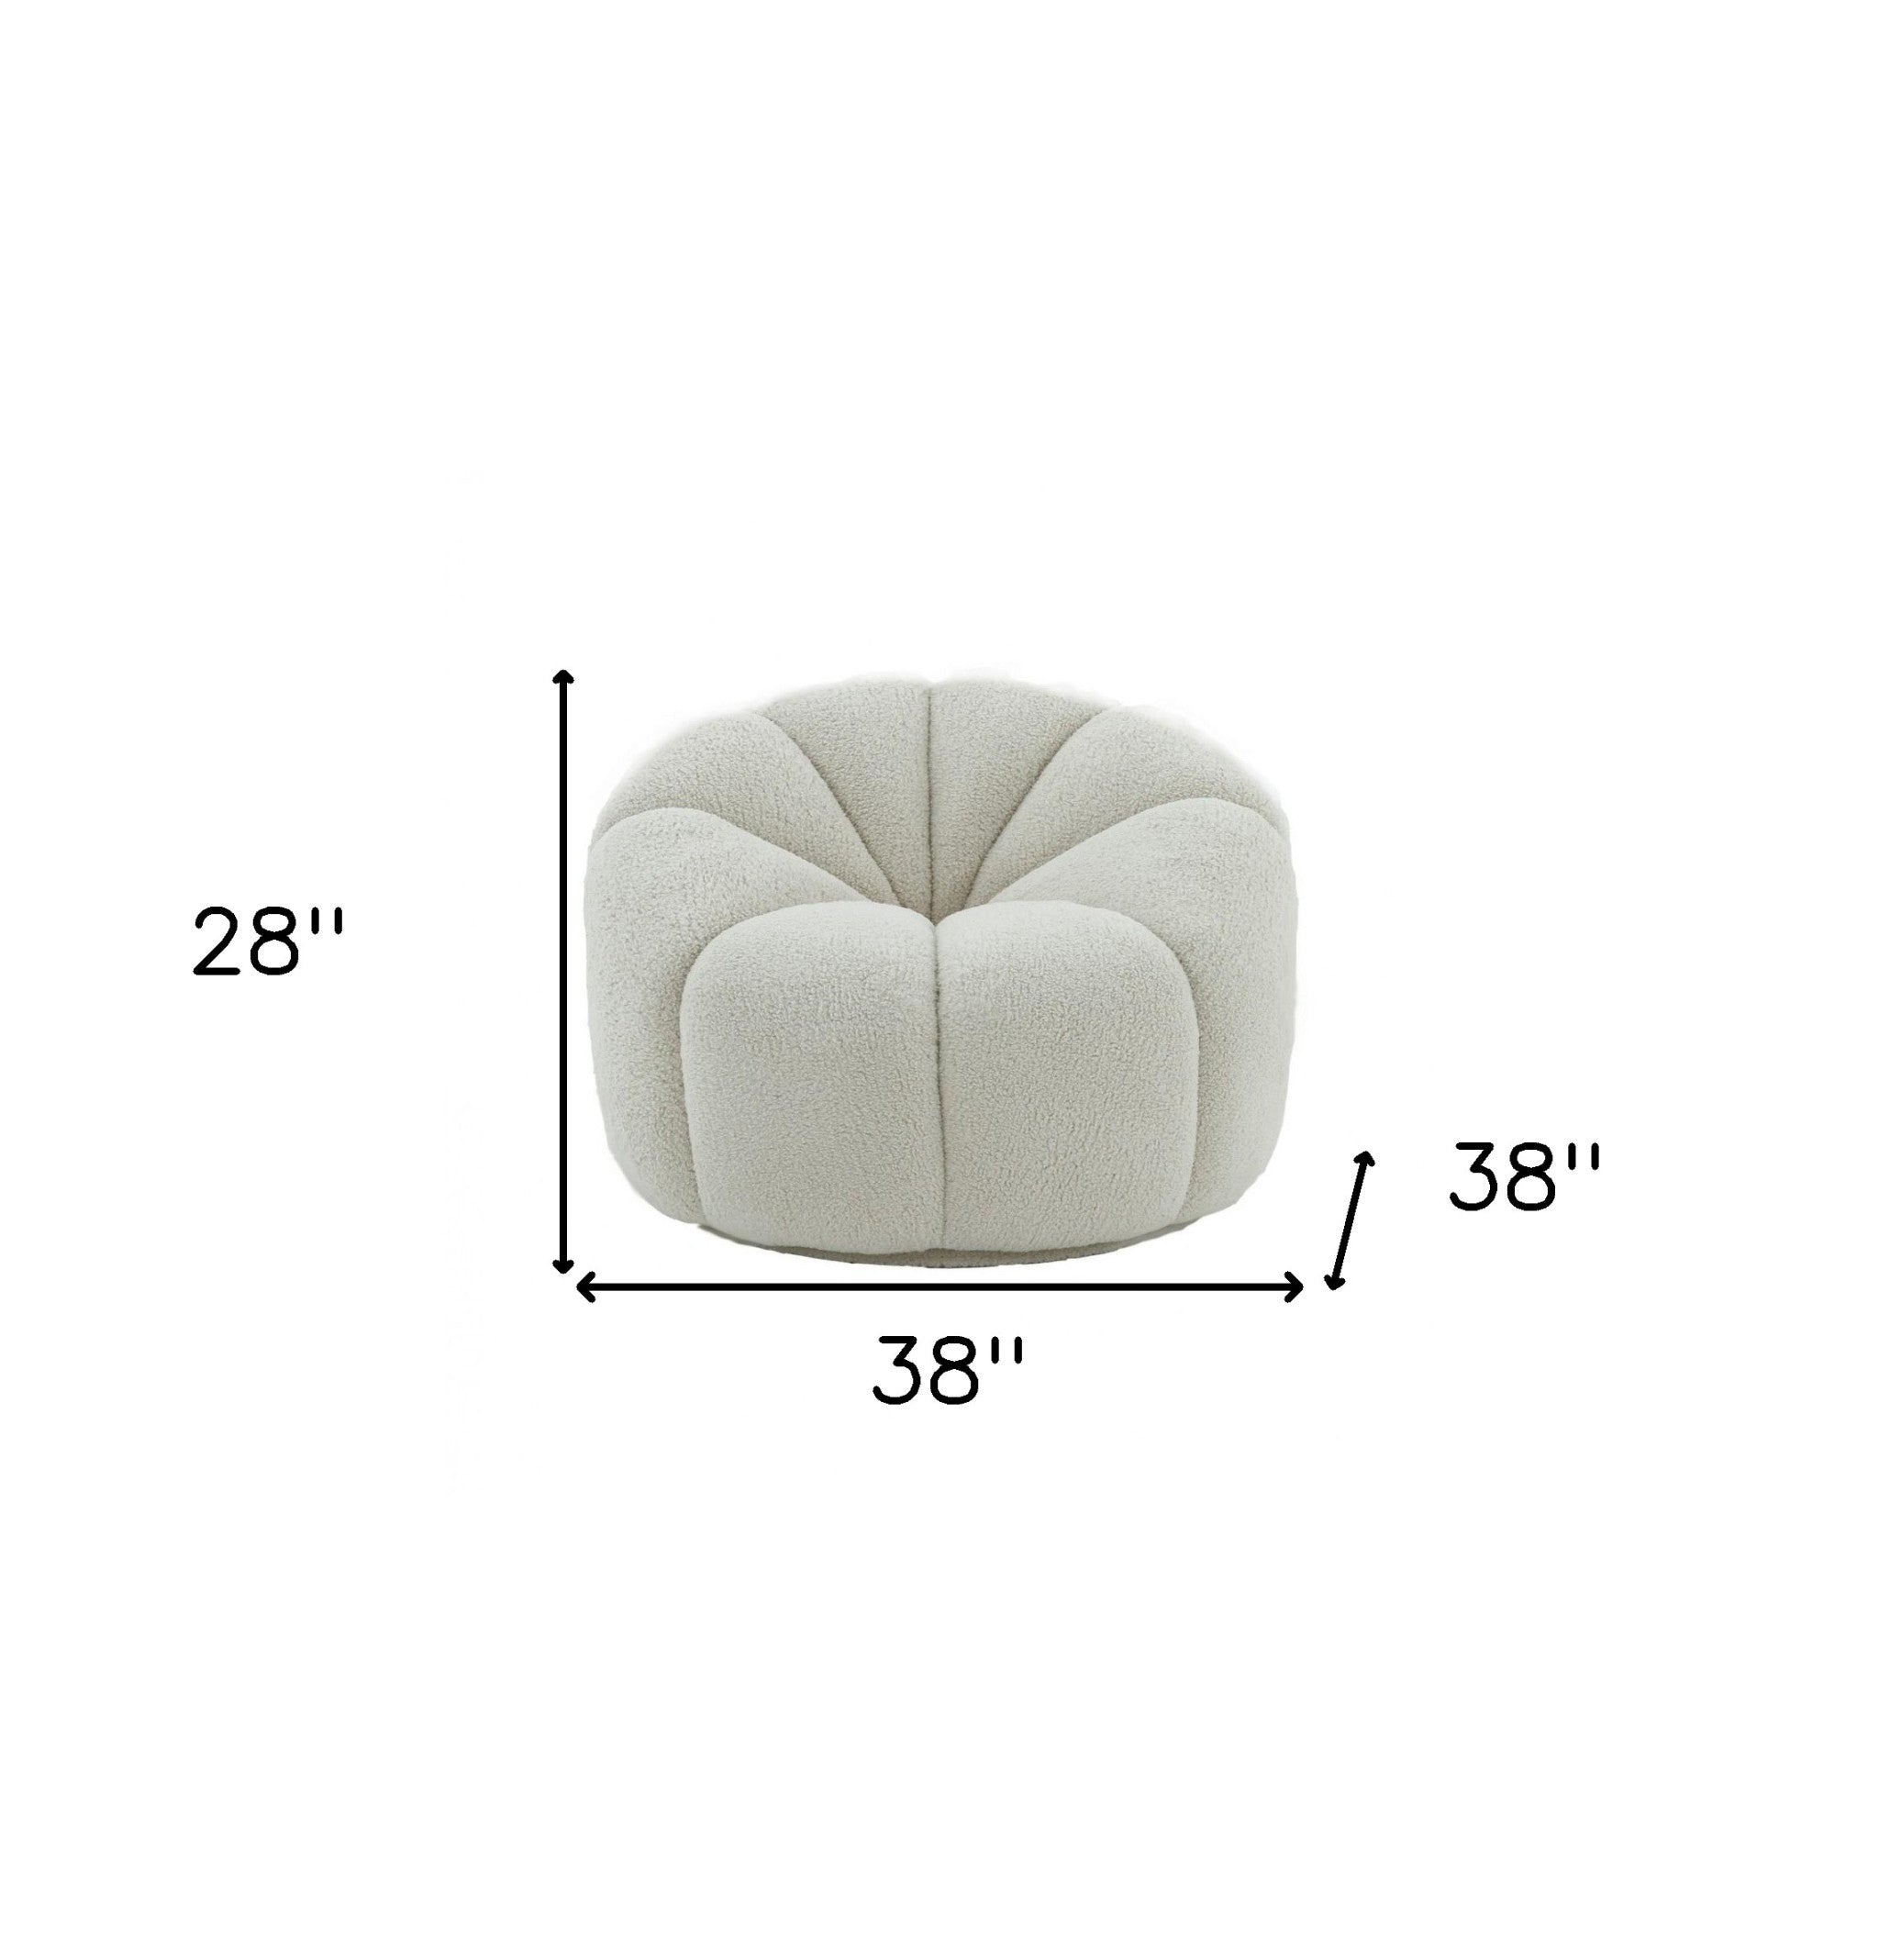 38" White Sherpa Lounge Chair